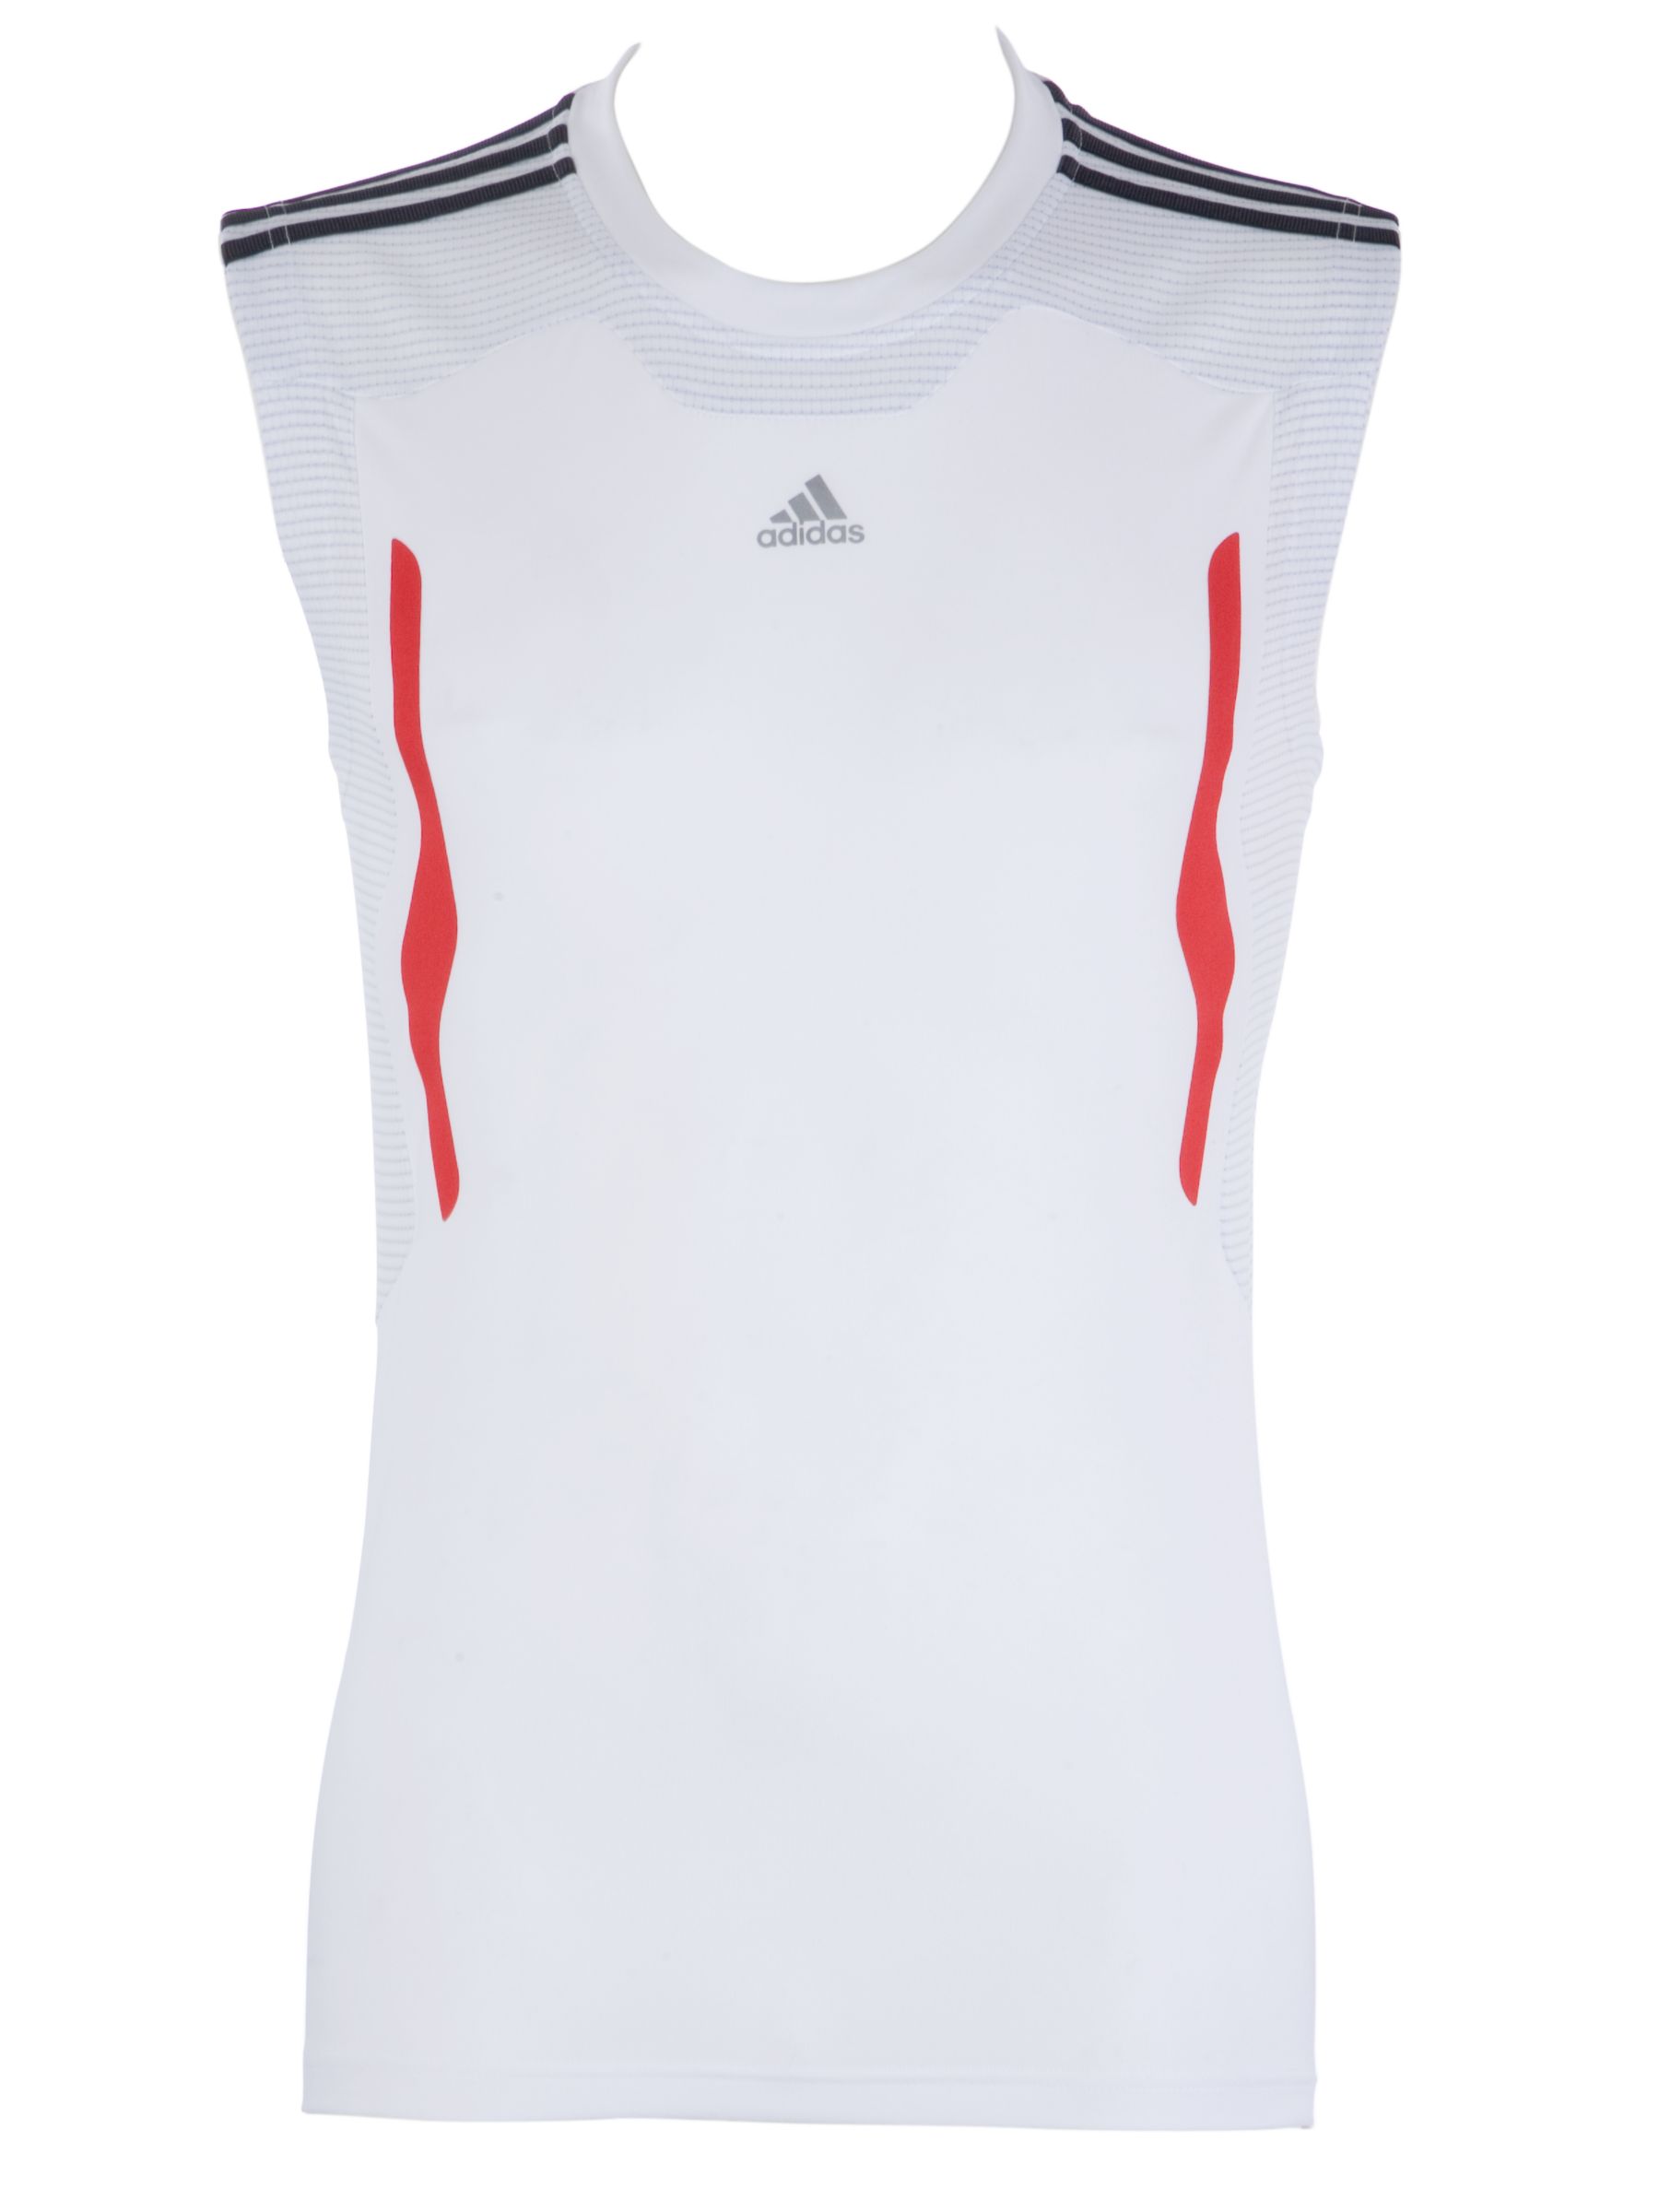 Adidas Clima 365 Sleeveless T-Shirt, White